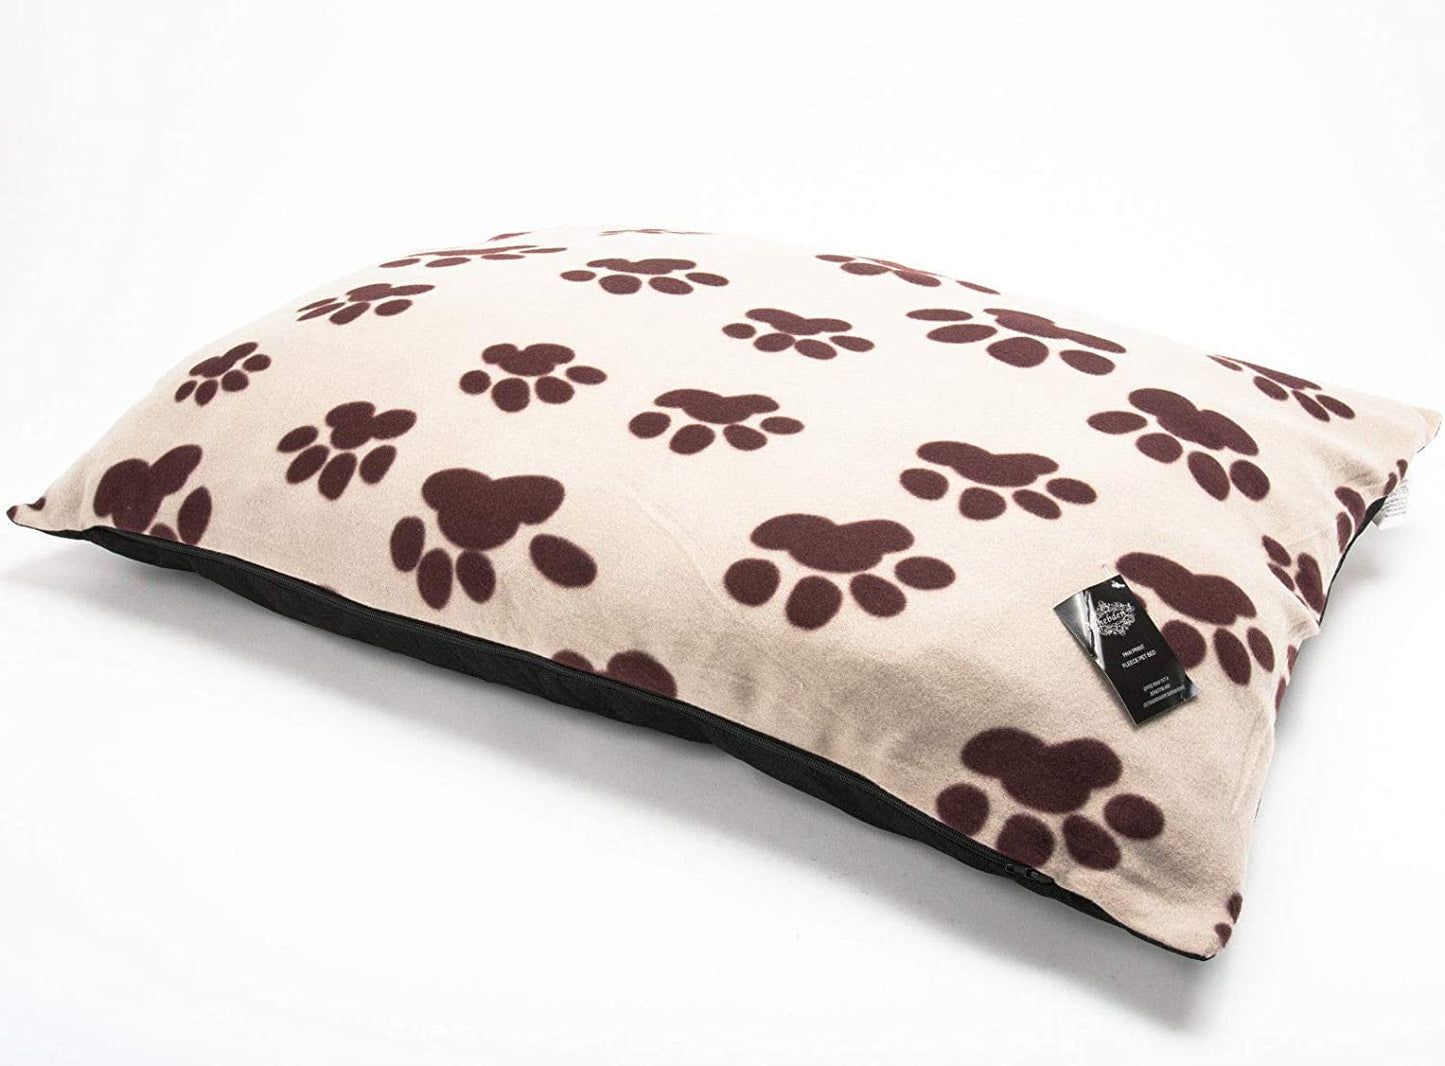 AmigoZone  Luxury Fleece Dog Bed Washable Zipped COVER ONLY